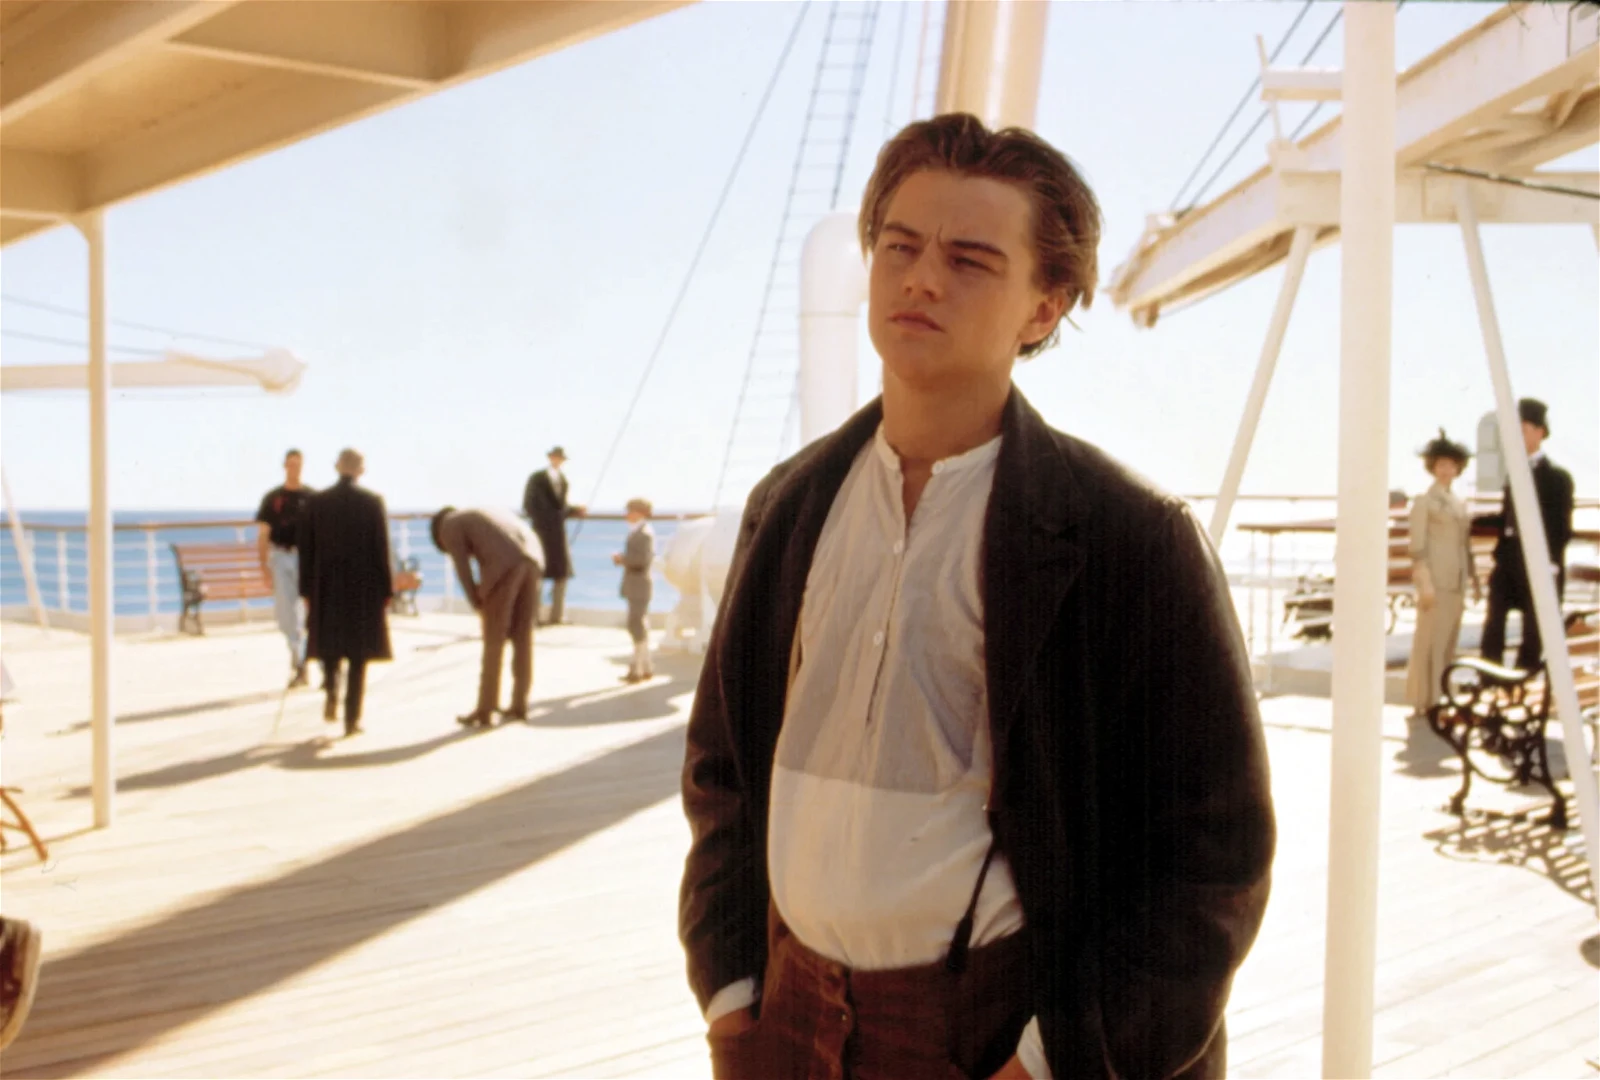 Leonardo DiCaprio as Jack in Titanic